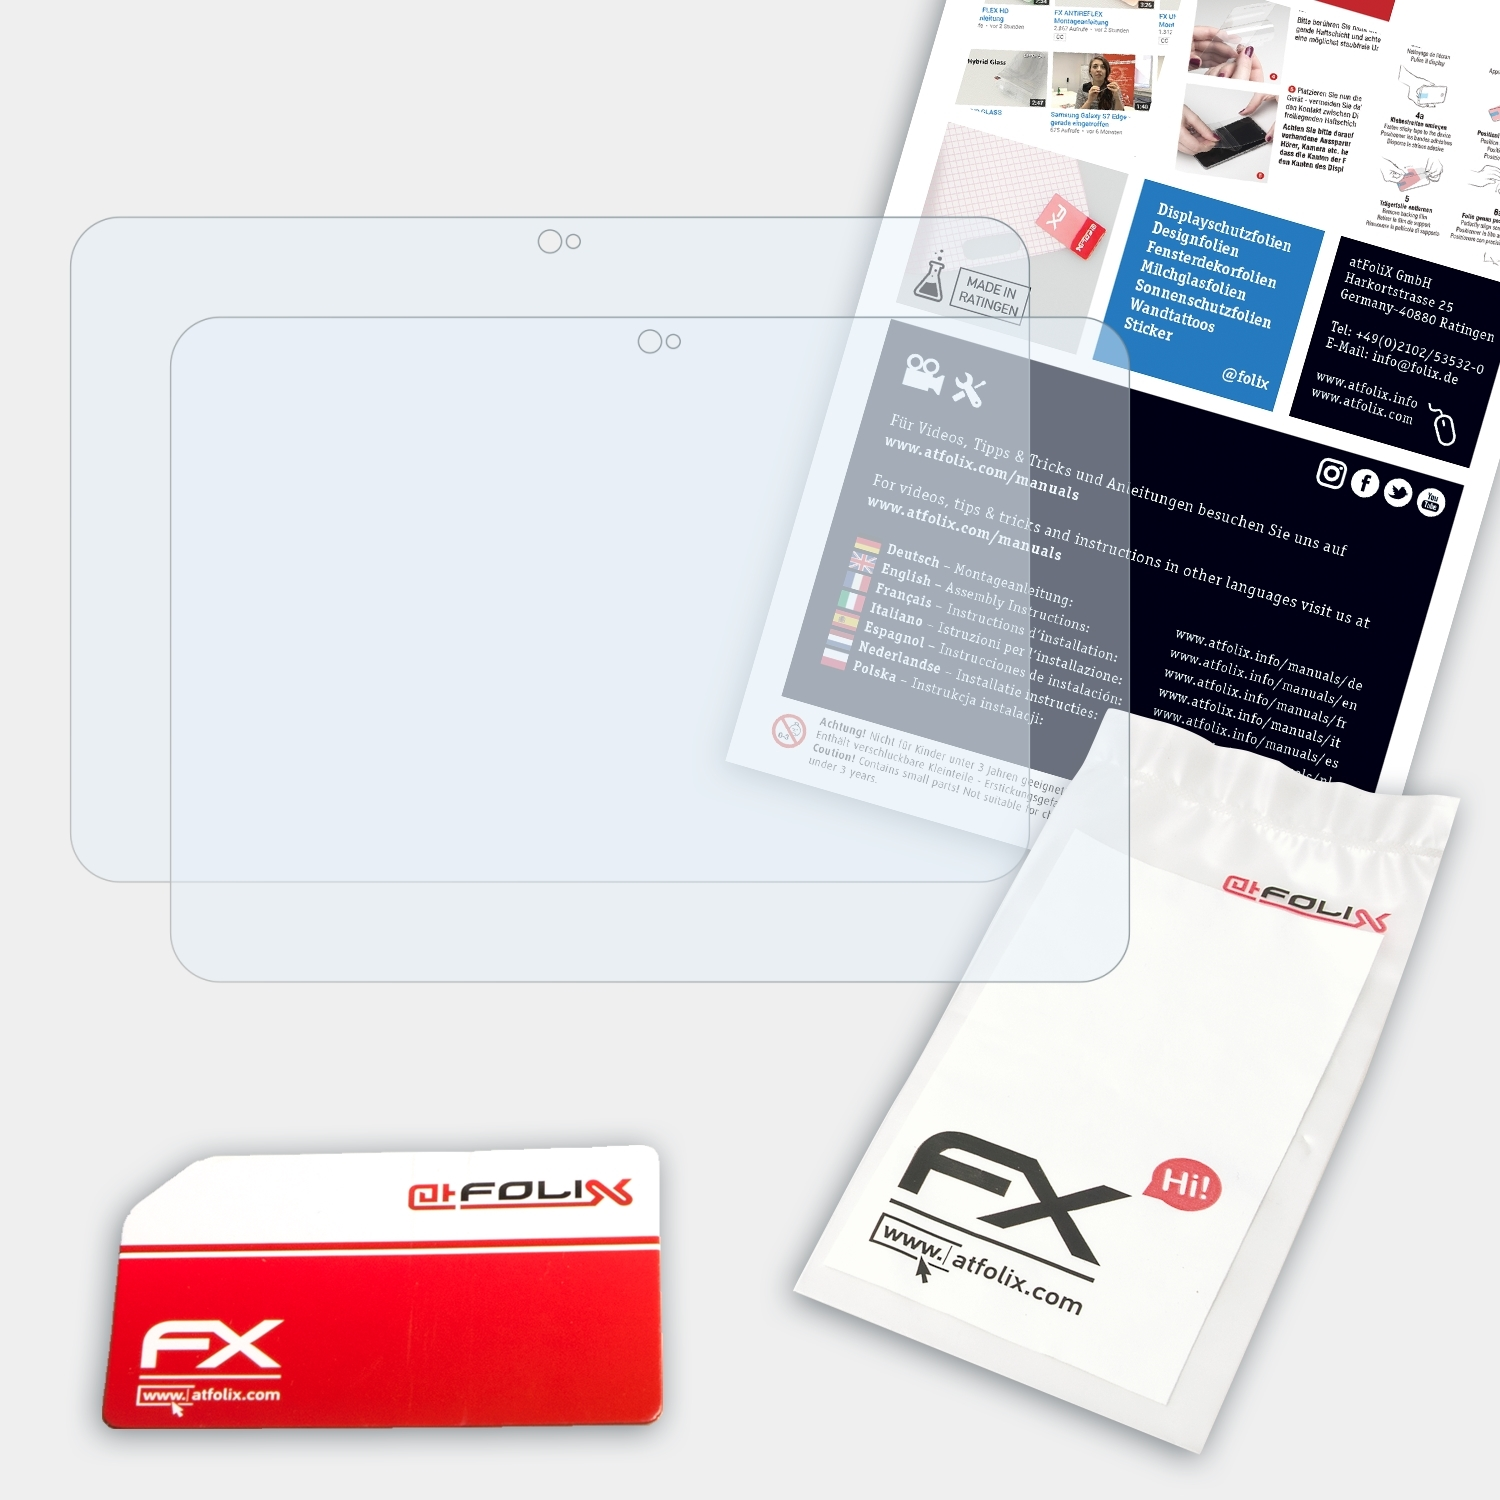 ATFOLIX 2x FX-Clear Displayschutz(für 10.1 Quad Captiva CAPTIVA Pad FHD)